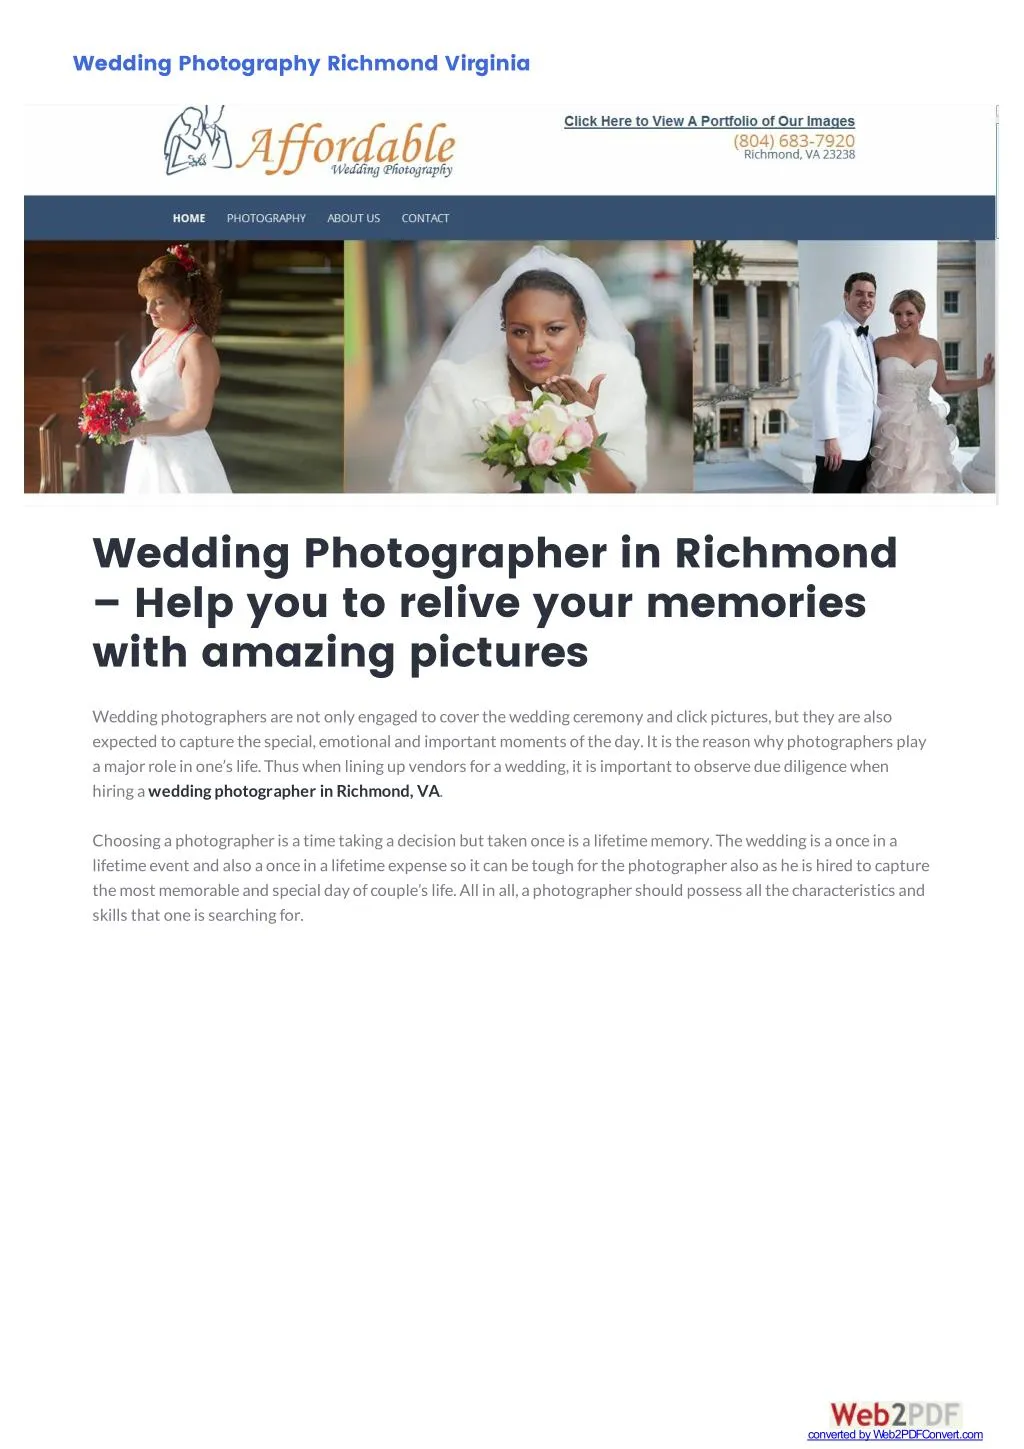 wedding photography richmond virginia n.